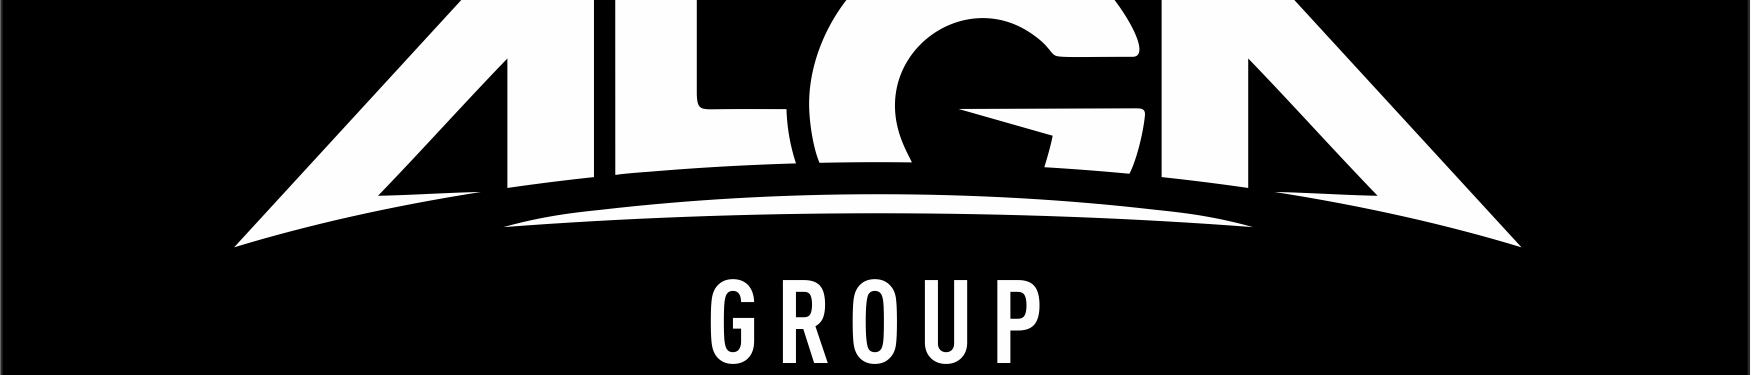 Alga Group's profile banner